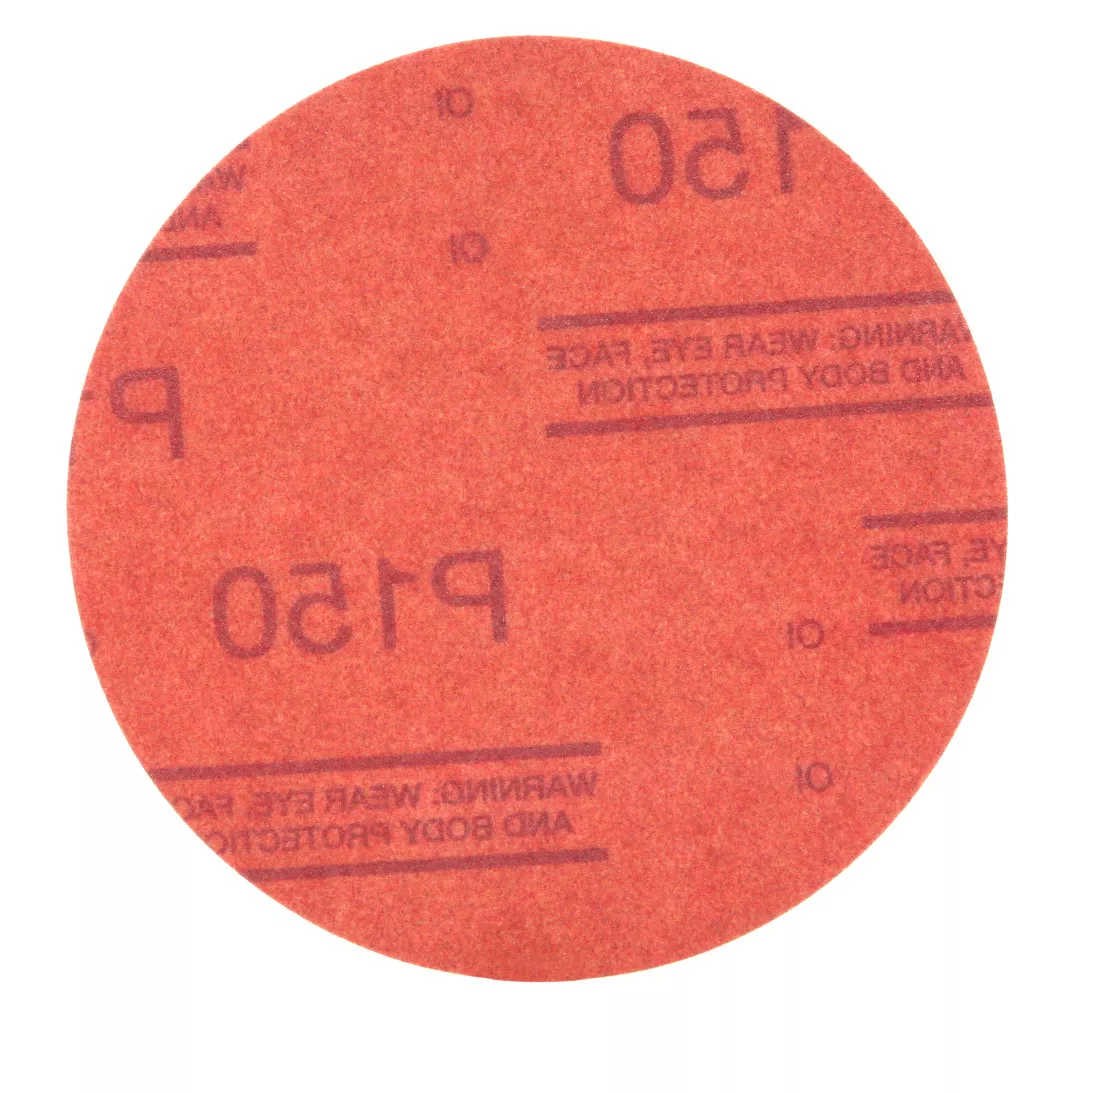 3M™ Hookit™ Red Abrasive Disc, 01299, 5 in, P150, 50 discs per carton, 6
cartons per case